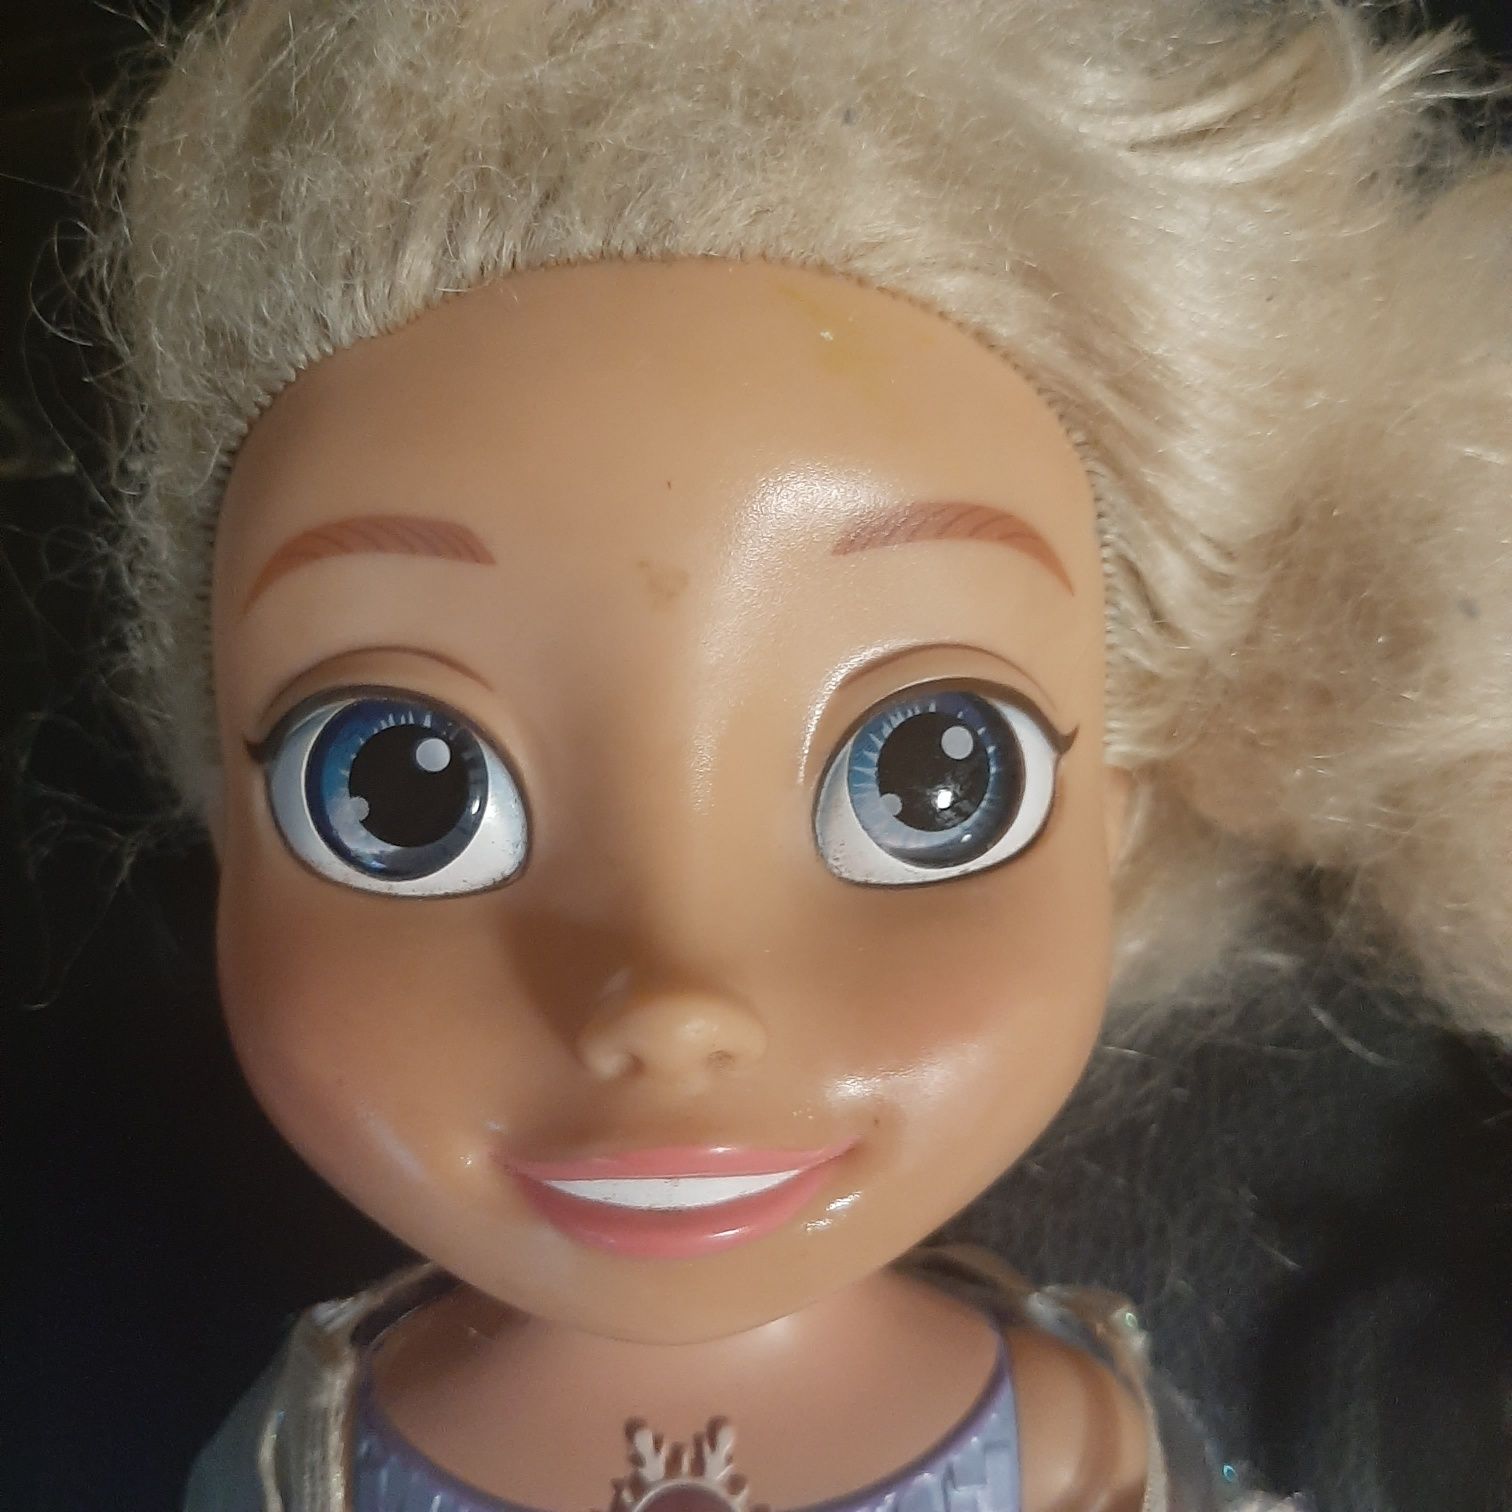 Śpiewająca lalka dziewczynka Elsa Kraina Lodu i gratis